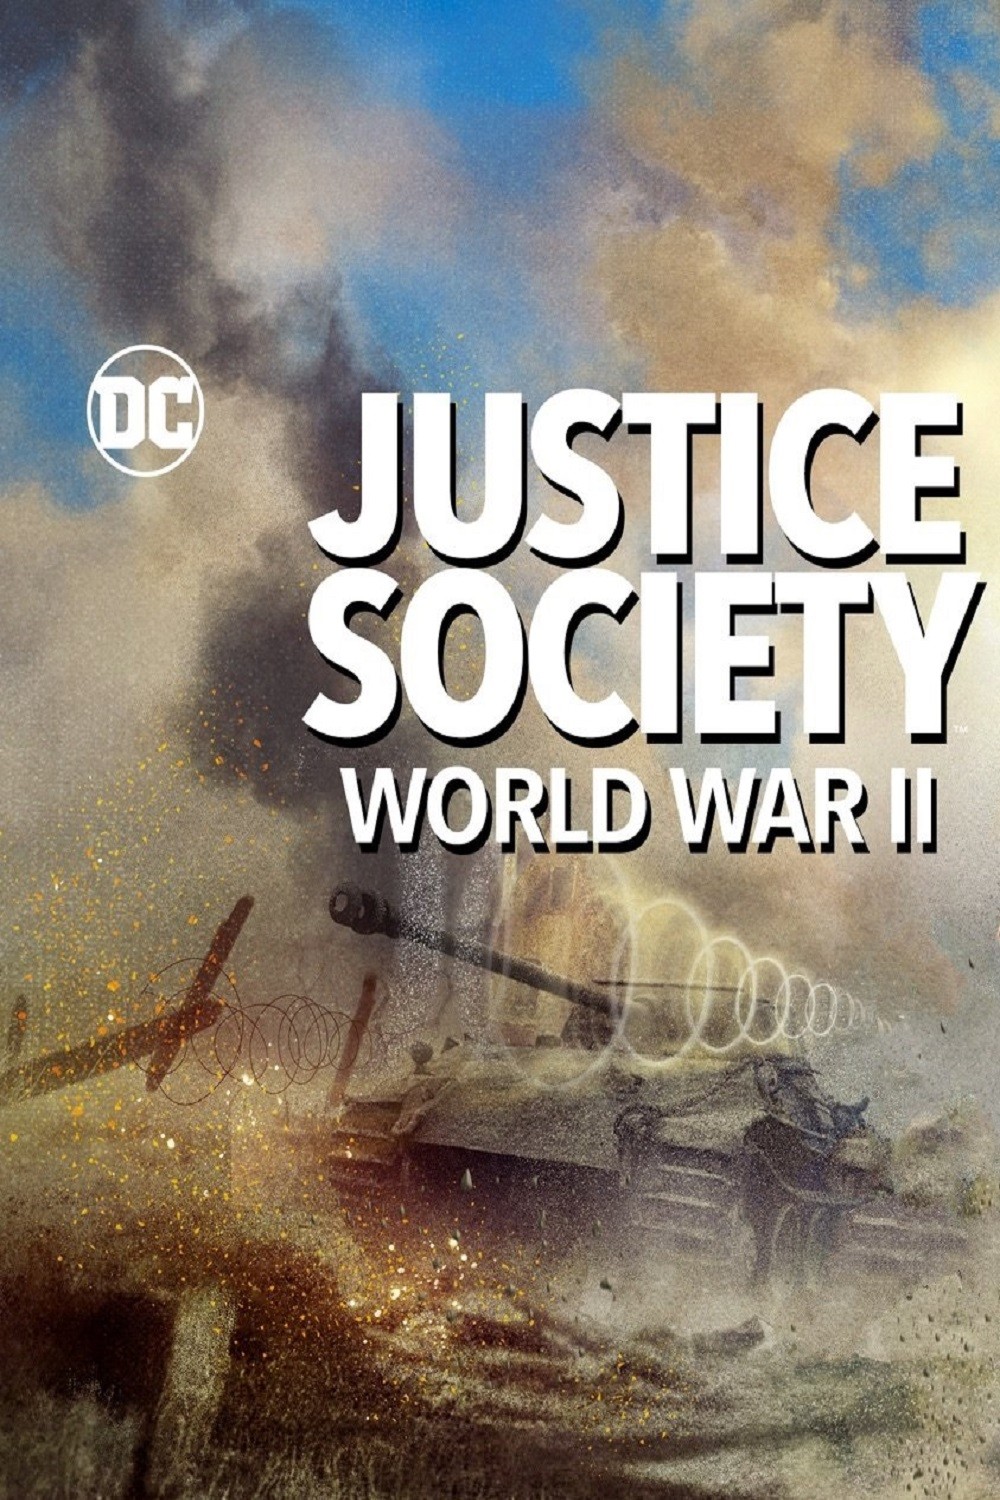 دانلود انیمیشن Justice Society: World War II 2021